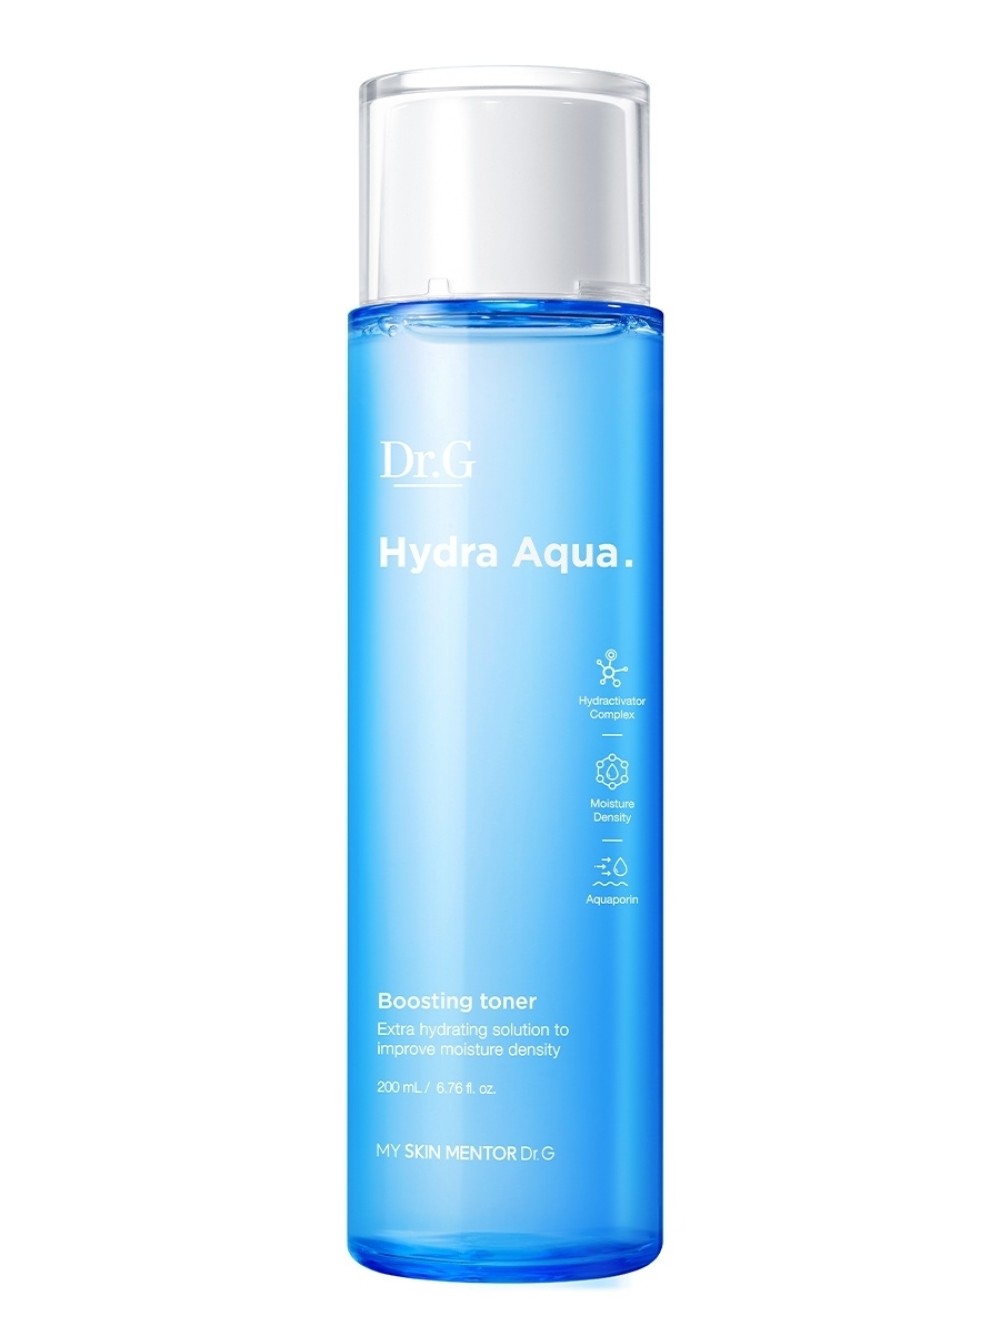 Тонер aqua. Dr.g hydra Aqua comforting Emulsion 20 ml. Hydra Aqua. The Skin House тонер для лица homme Essential Aqua Toner. Тонер пузырьковый для лица лифтинг.